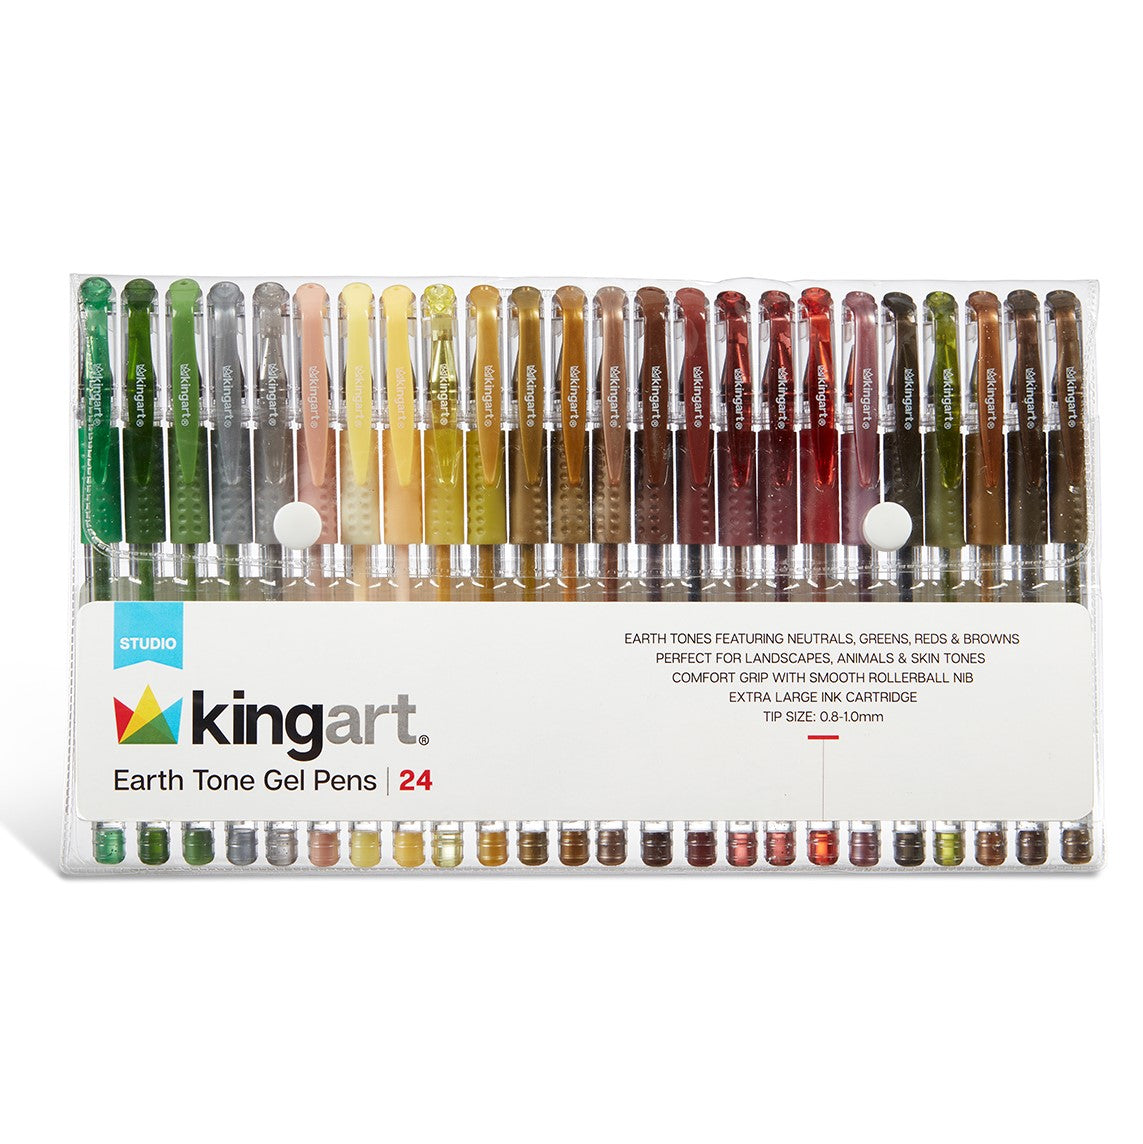 King Art Gel Pens #king #art #gel #pen #jellyroll #laineywilson #save